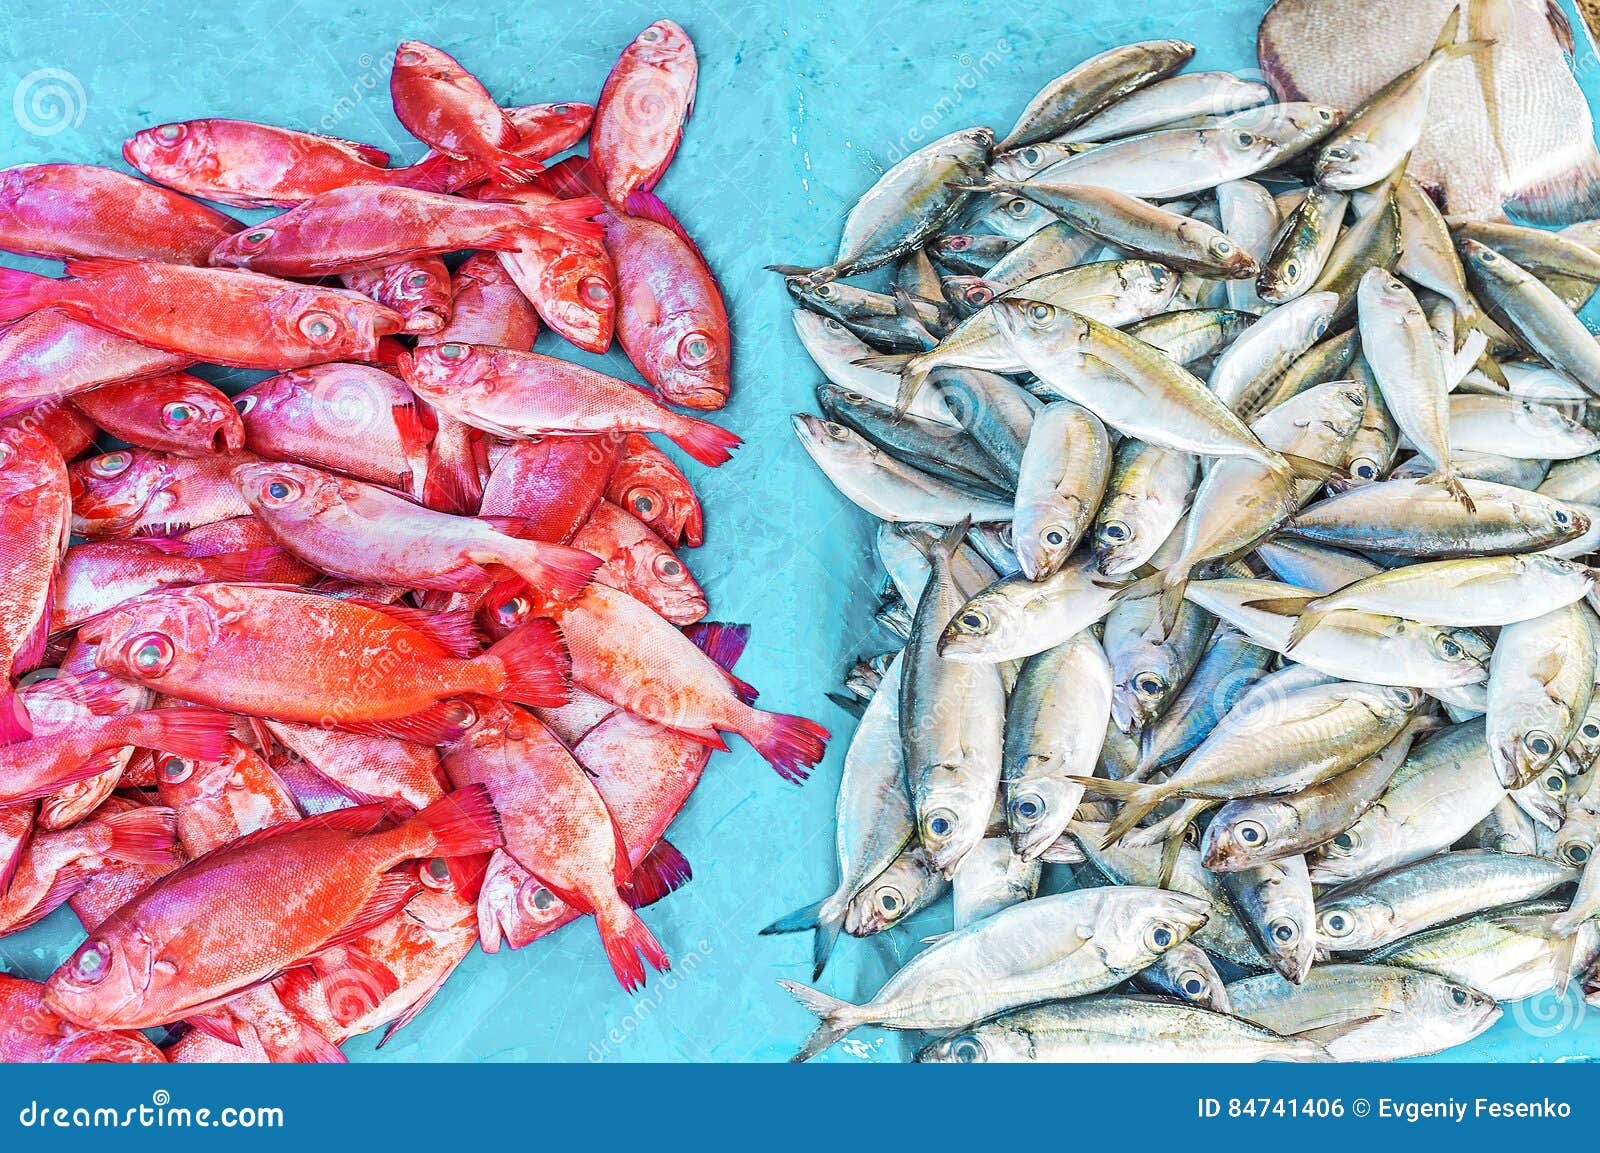 Рыба на шри ланке. Рыбный рынок Шри Ланка. Рыба Шри Ланка. Red Fish Шри Ланка. Рыбный рынок в Галле Шри Ланка.